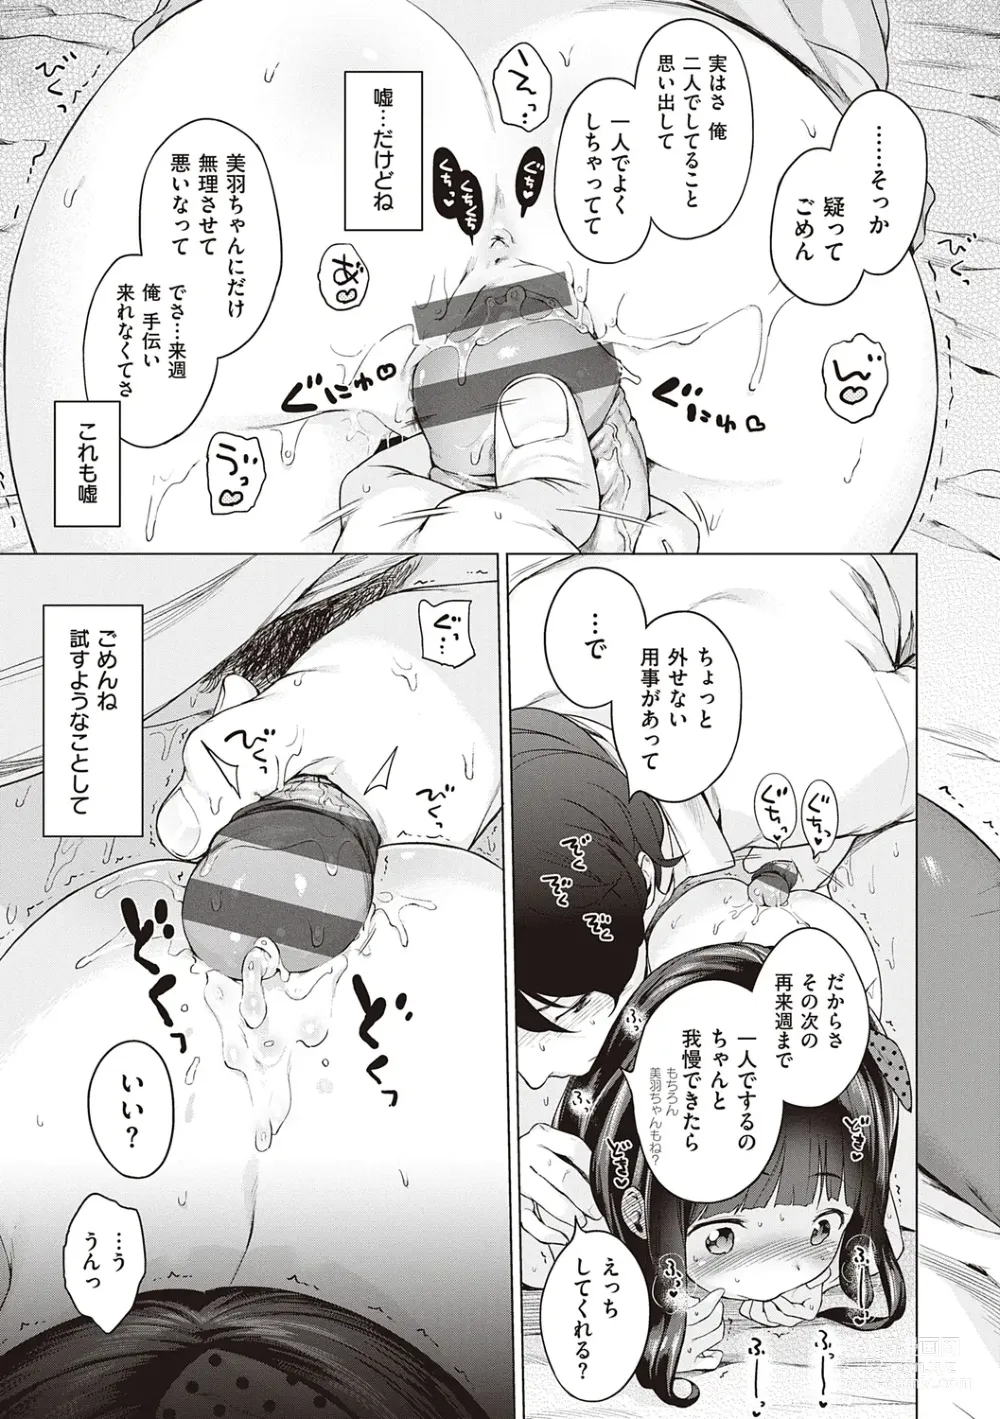 Page 35 of manga Motto! Hatsukoi Ribbon.